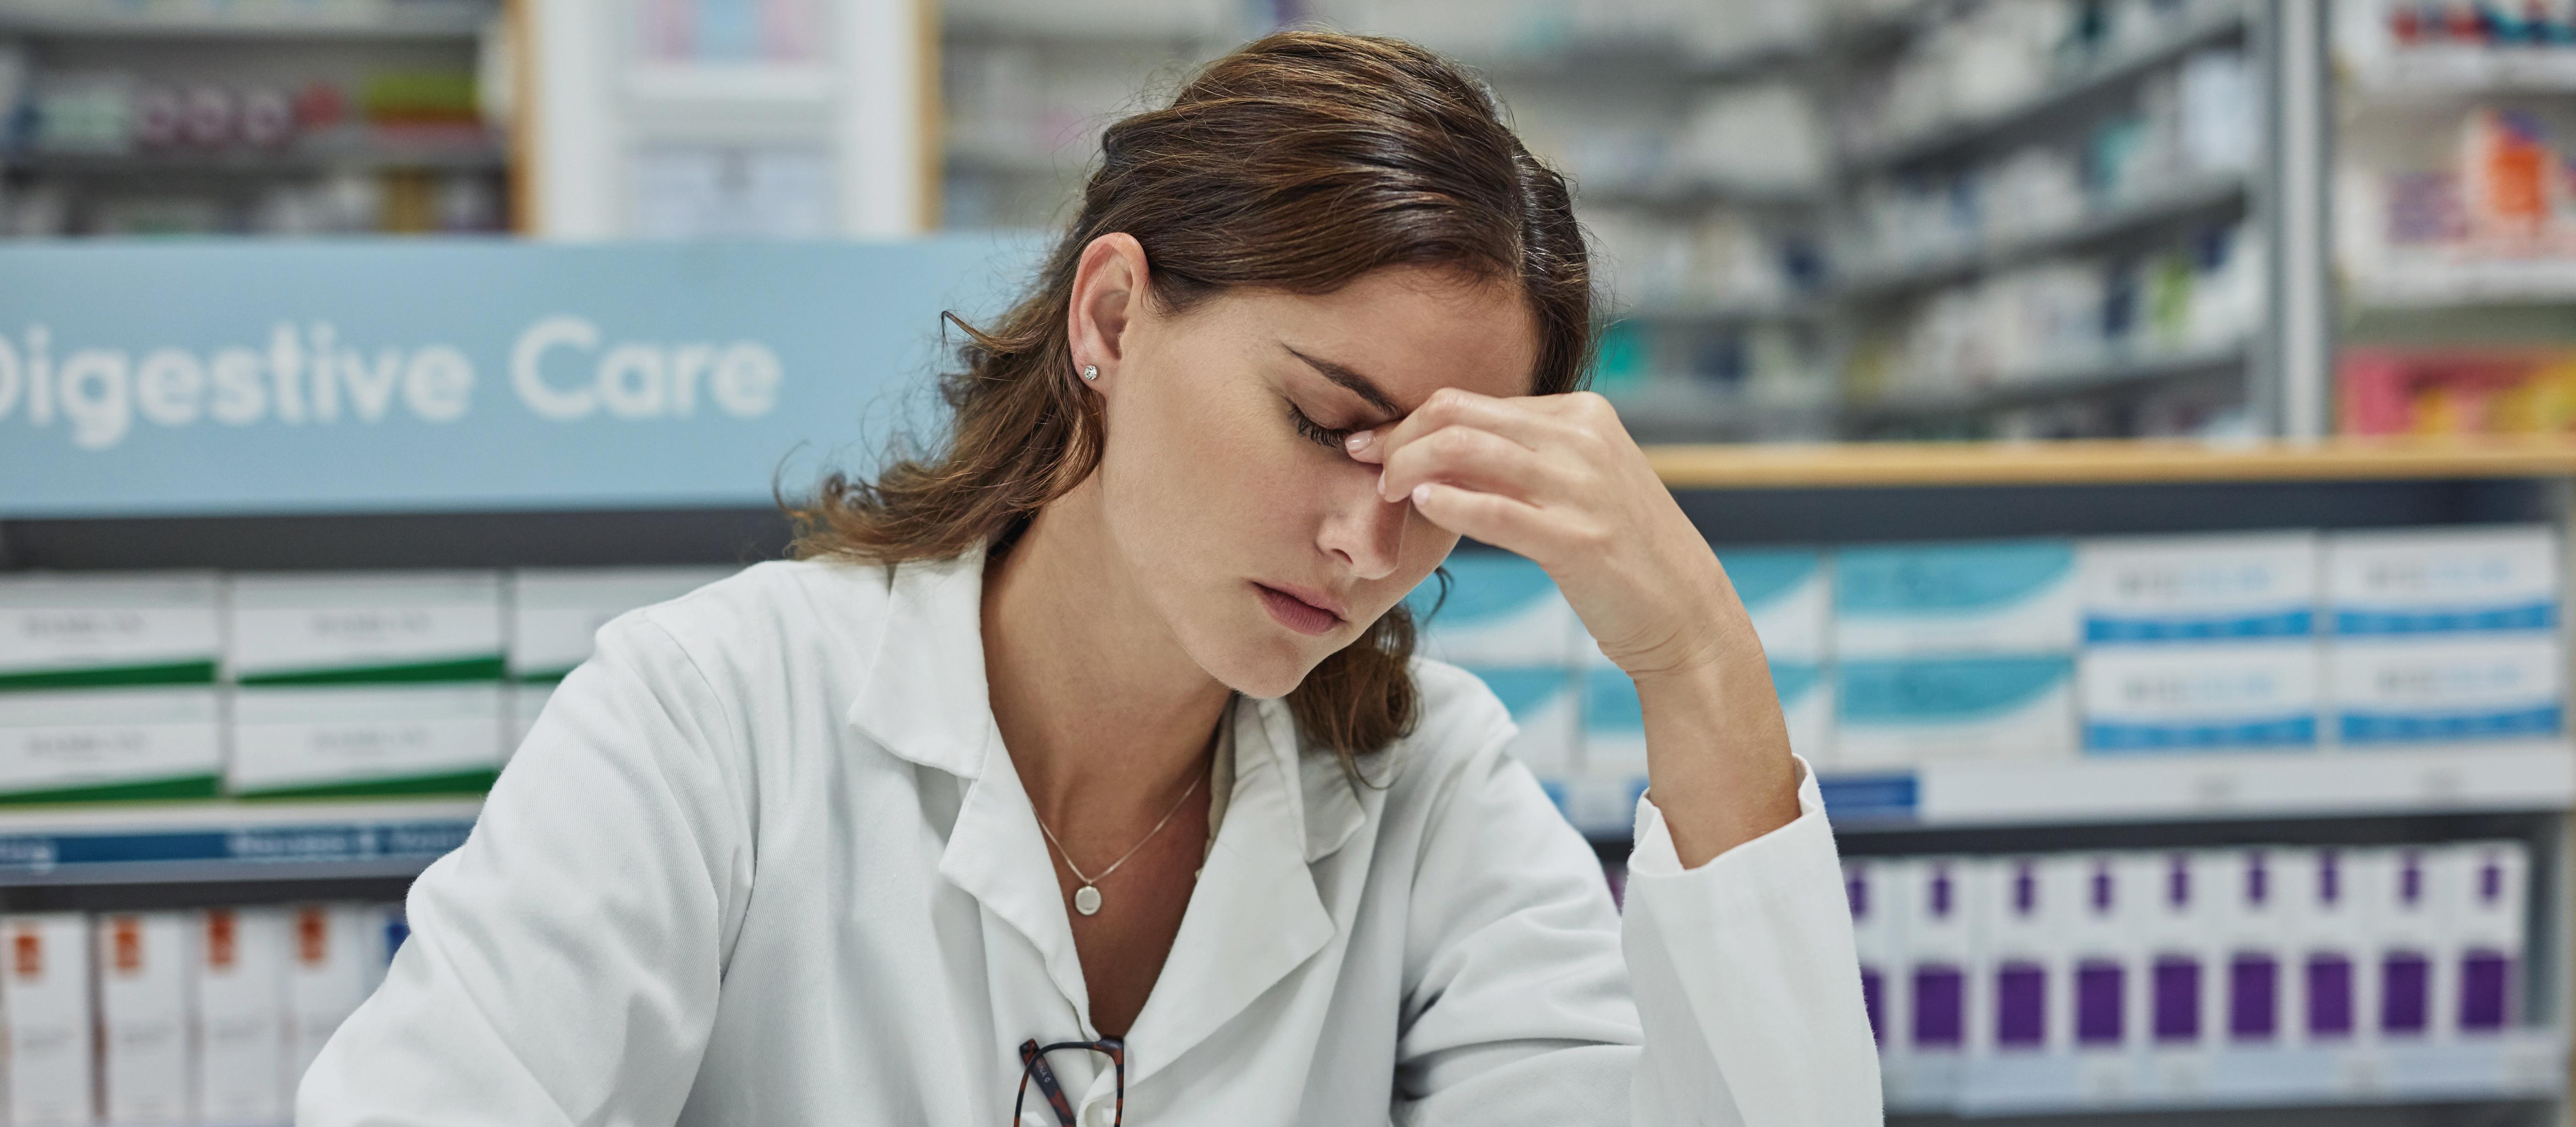 Stressed with headache pharmacist 